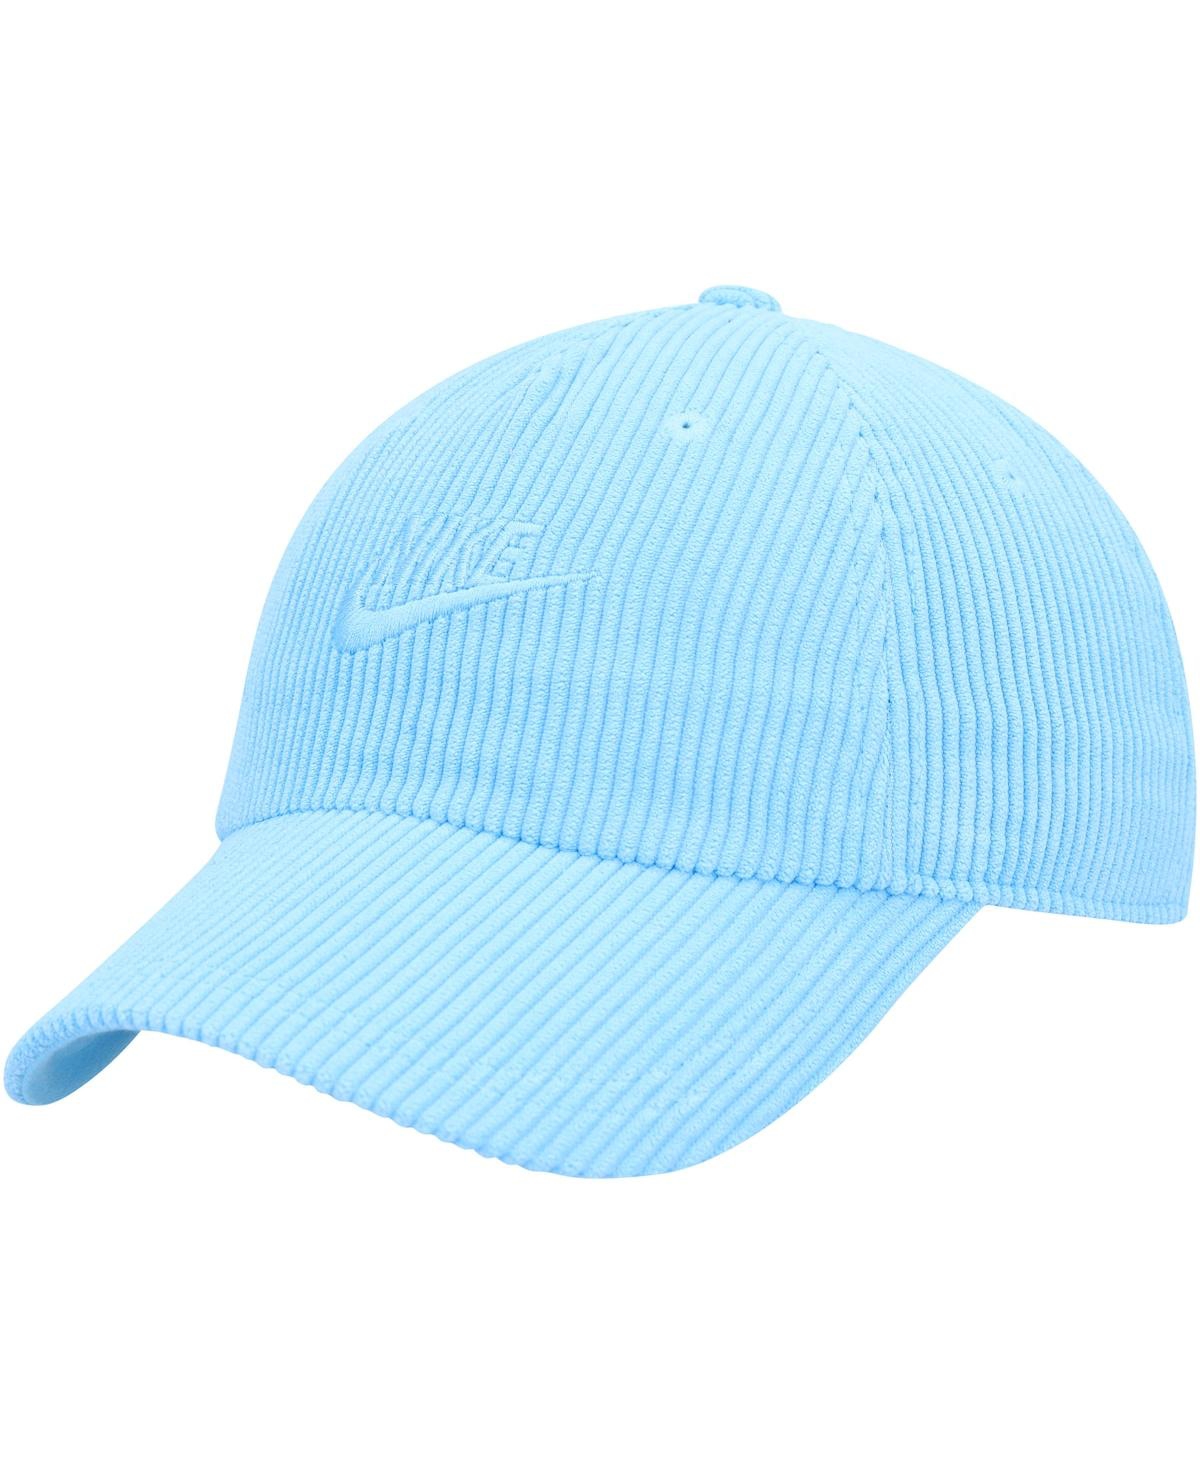 Men's and Women's Nike Light Blue Corduroy Lifestyle Club Adjustable Hat - Light Blue